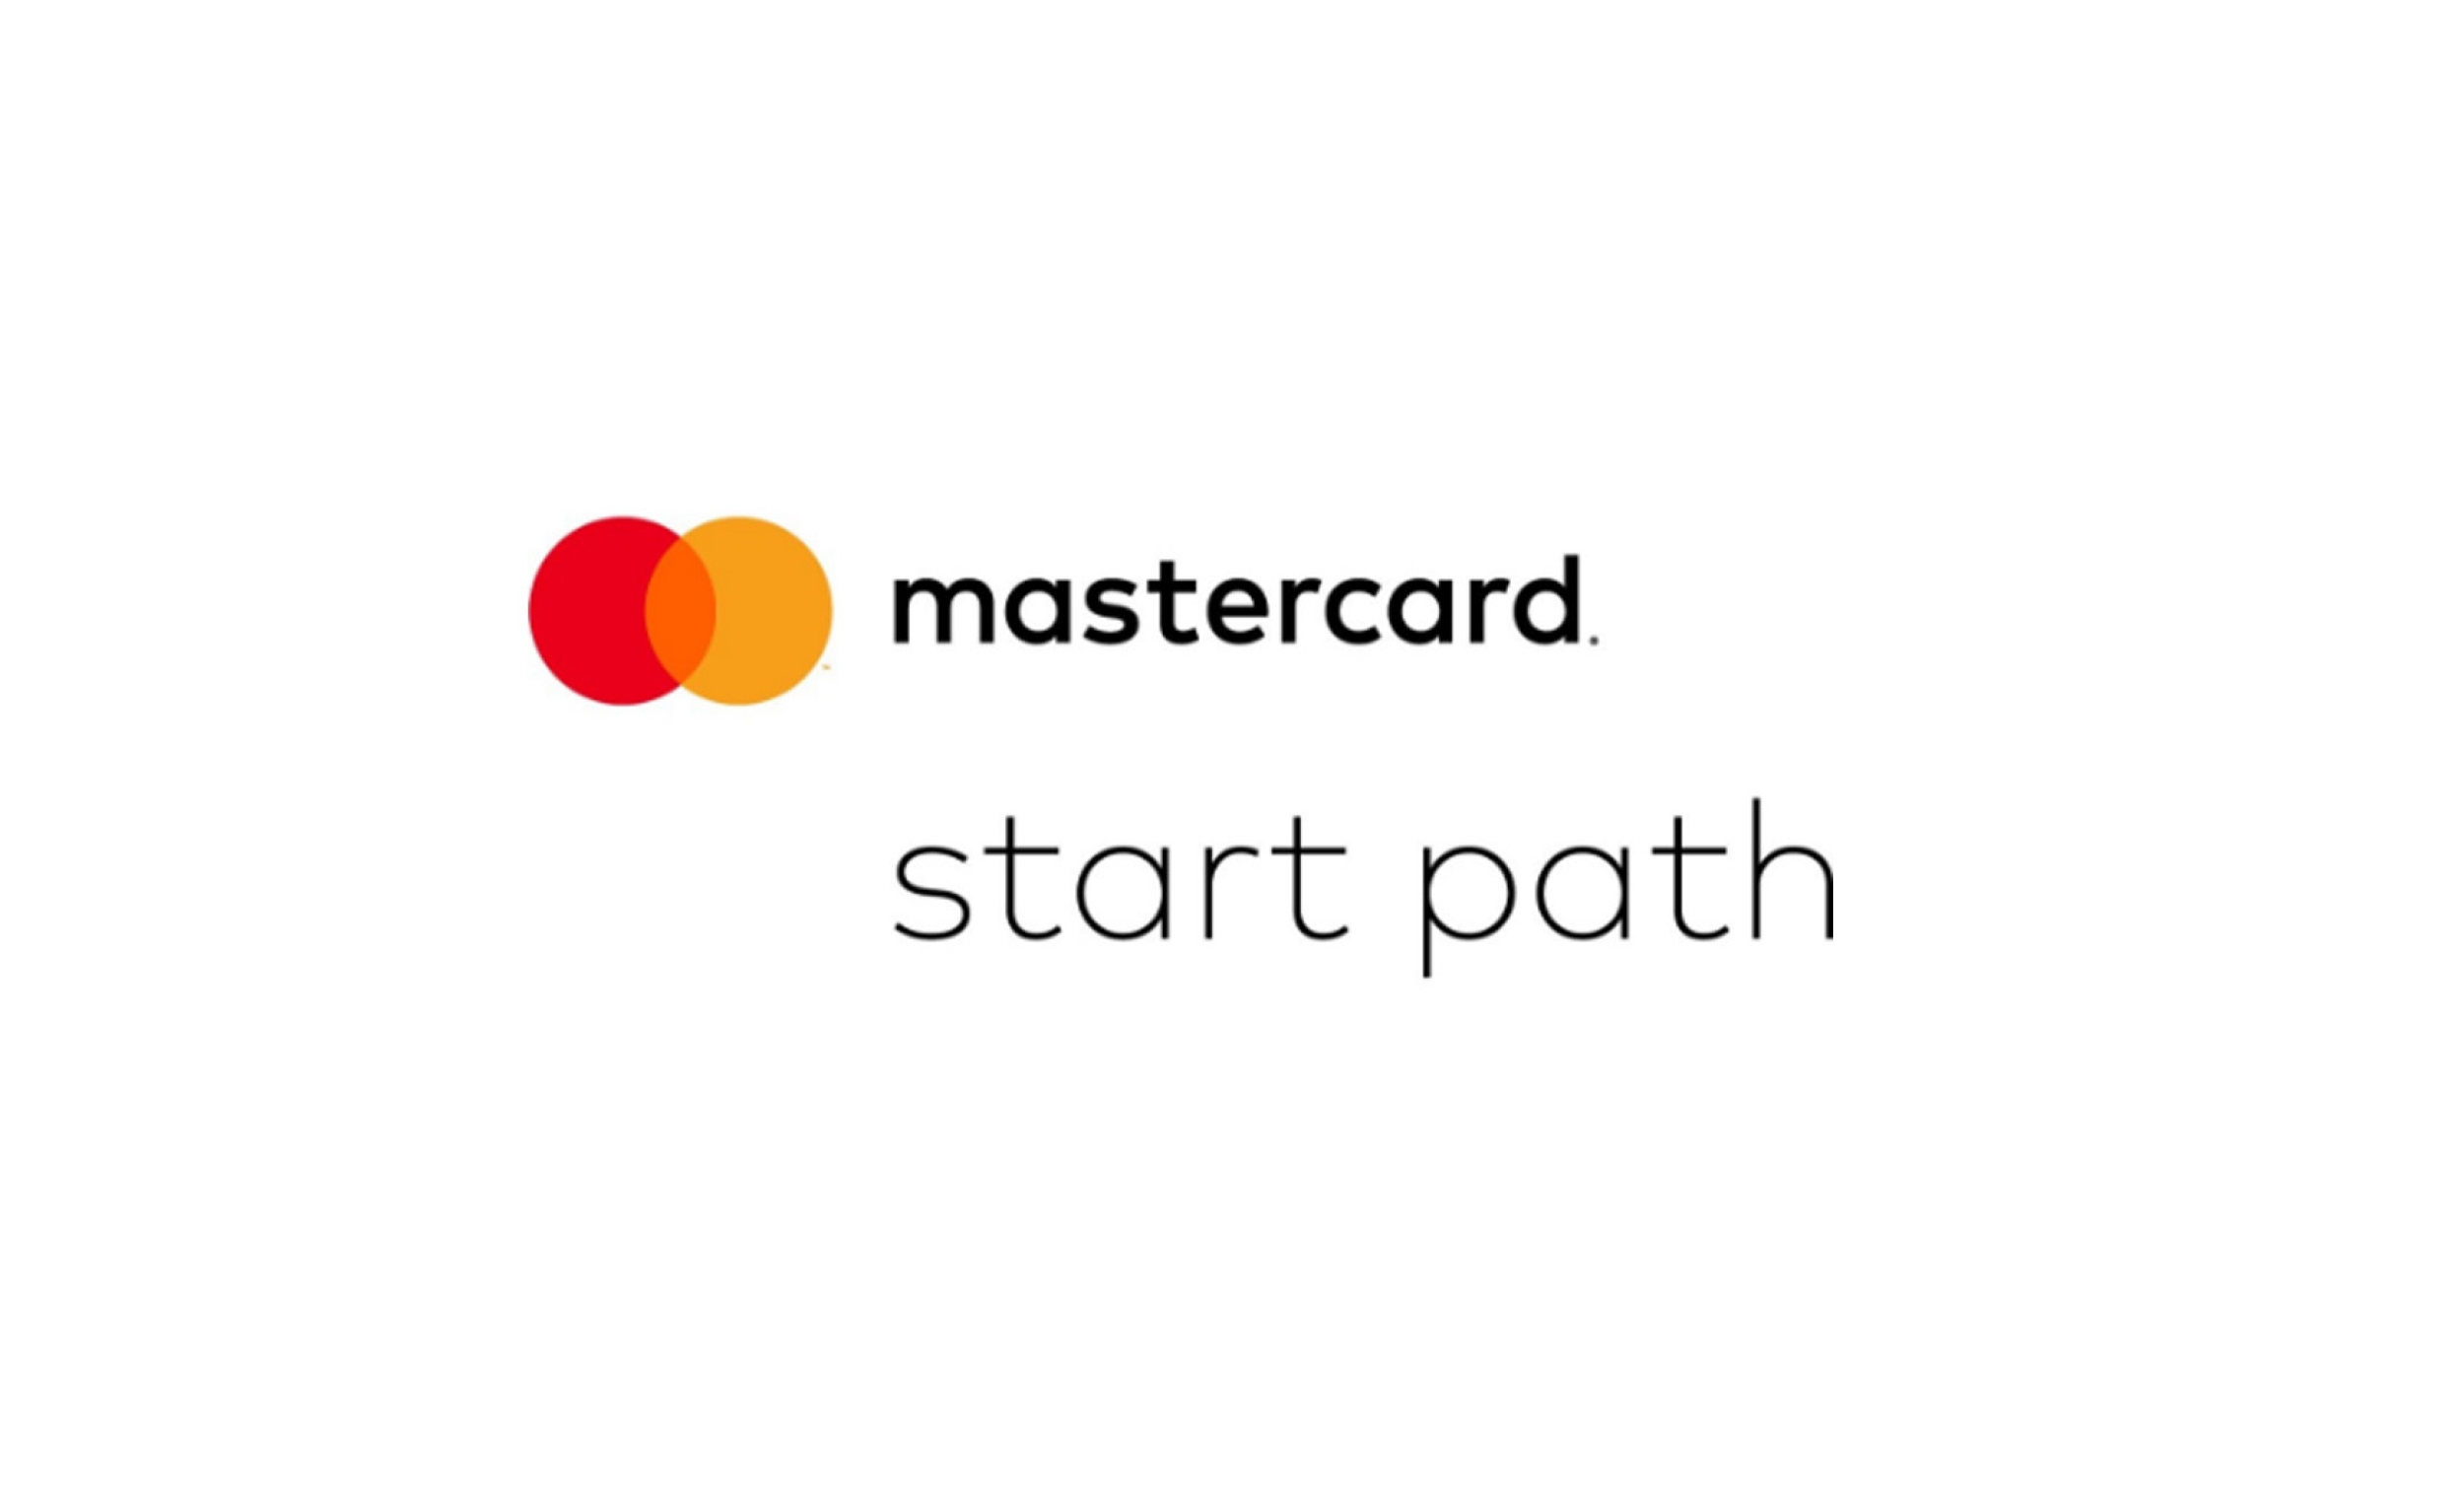 Mastercard Startpath logo.